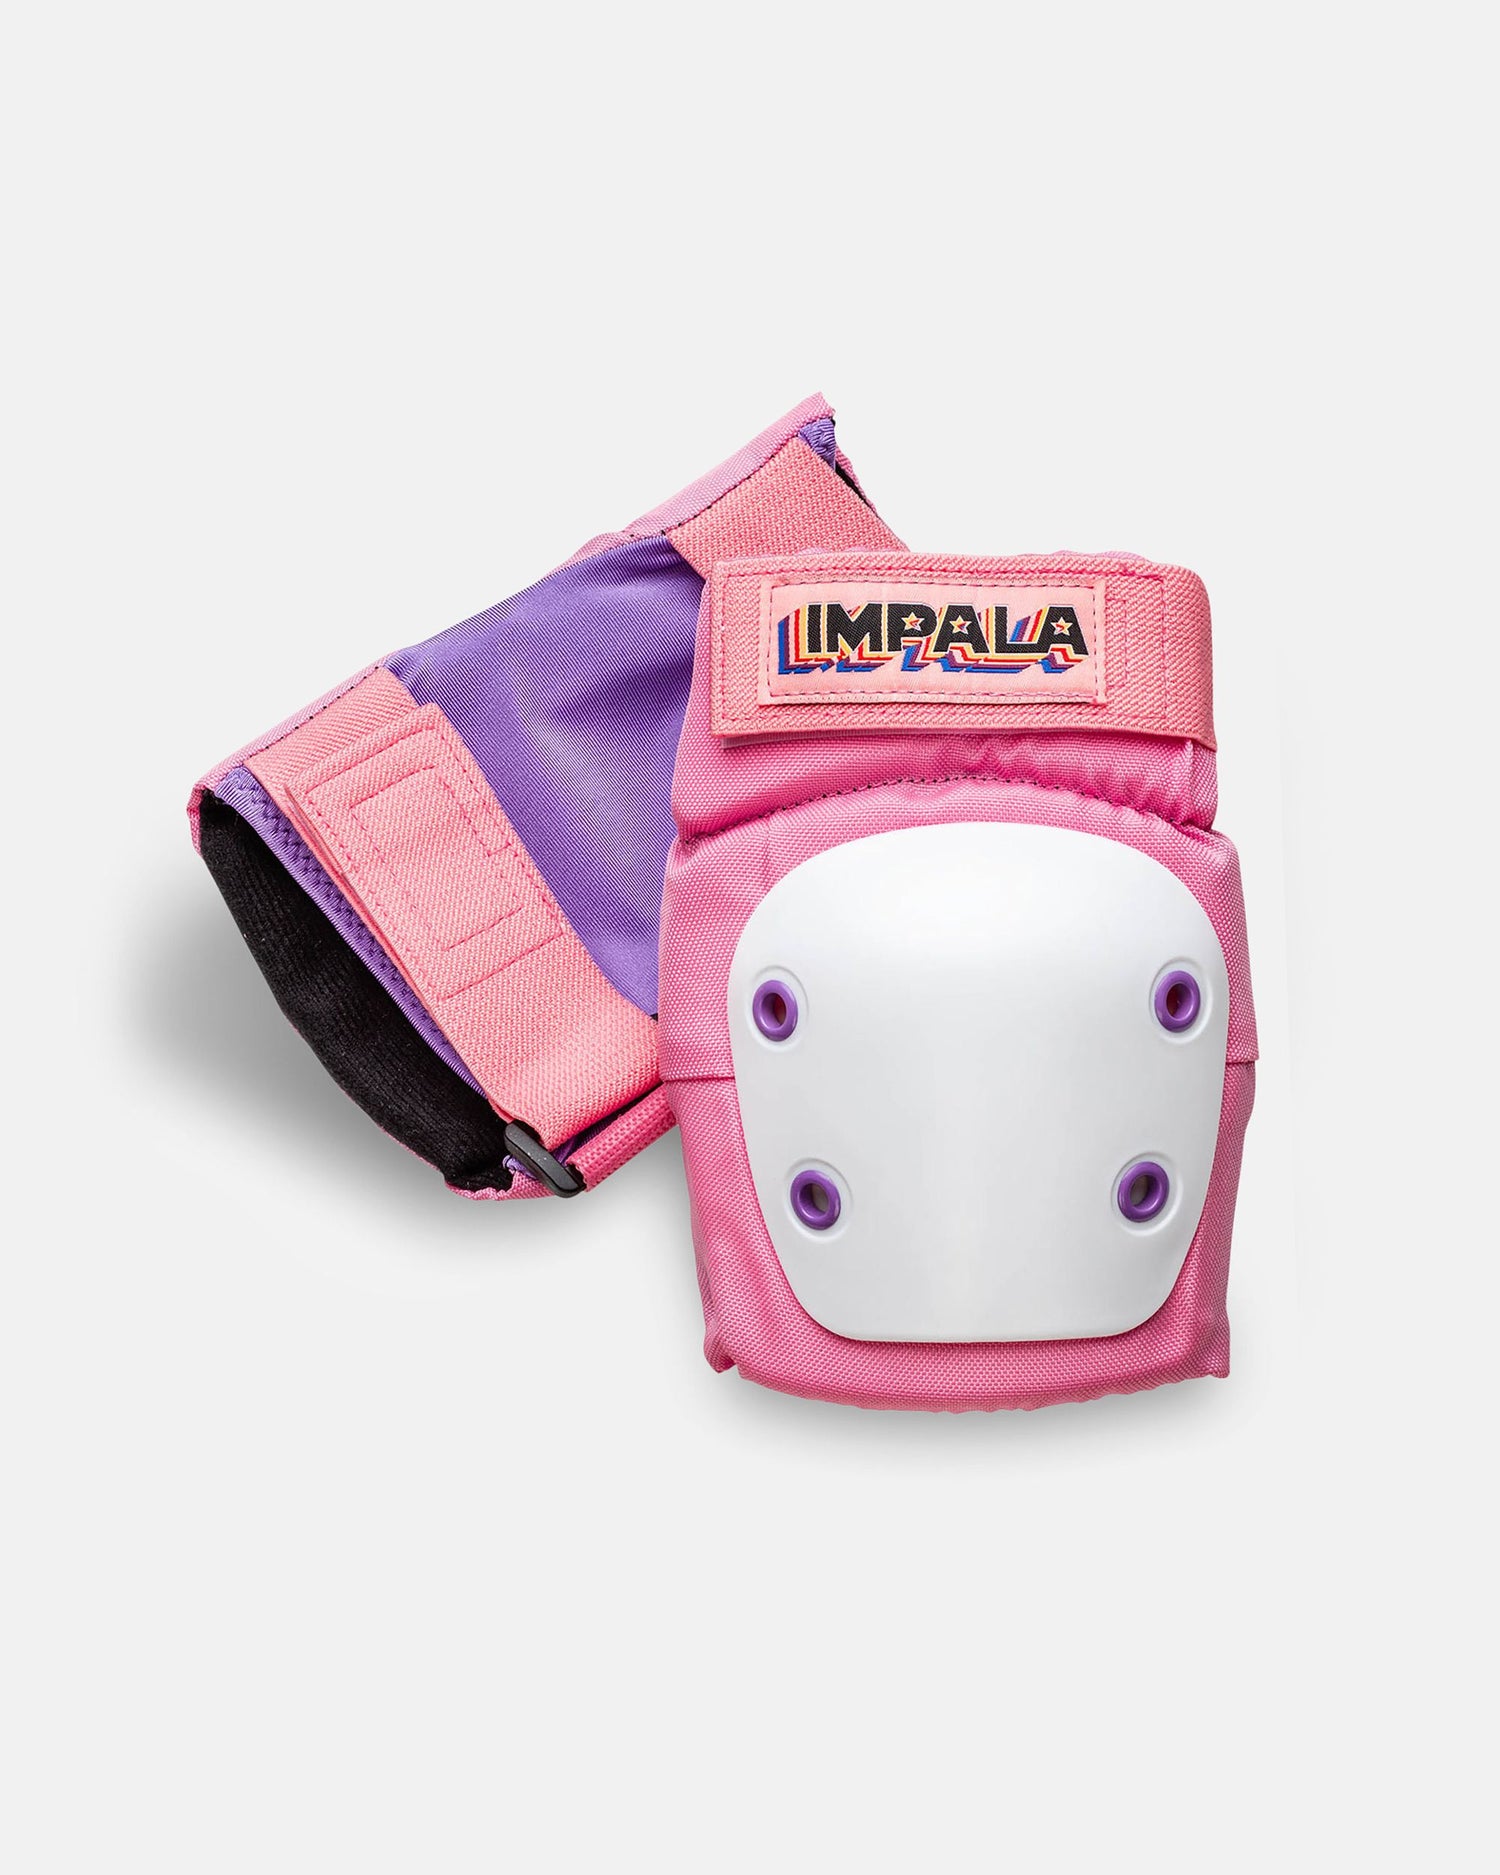 Impala Protective Set - Pink